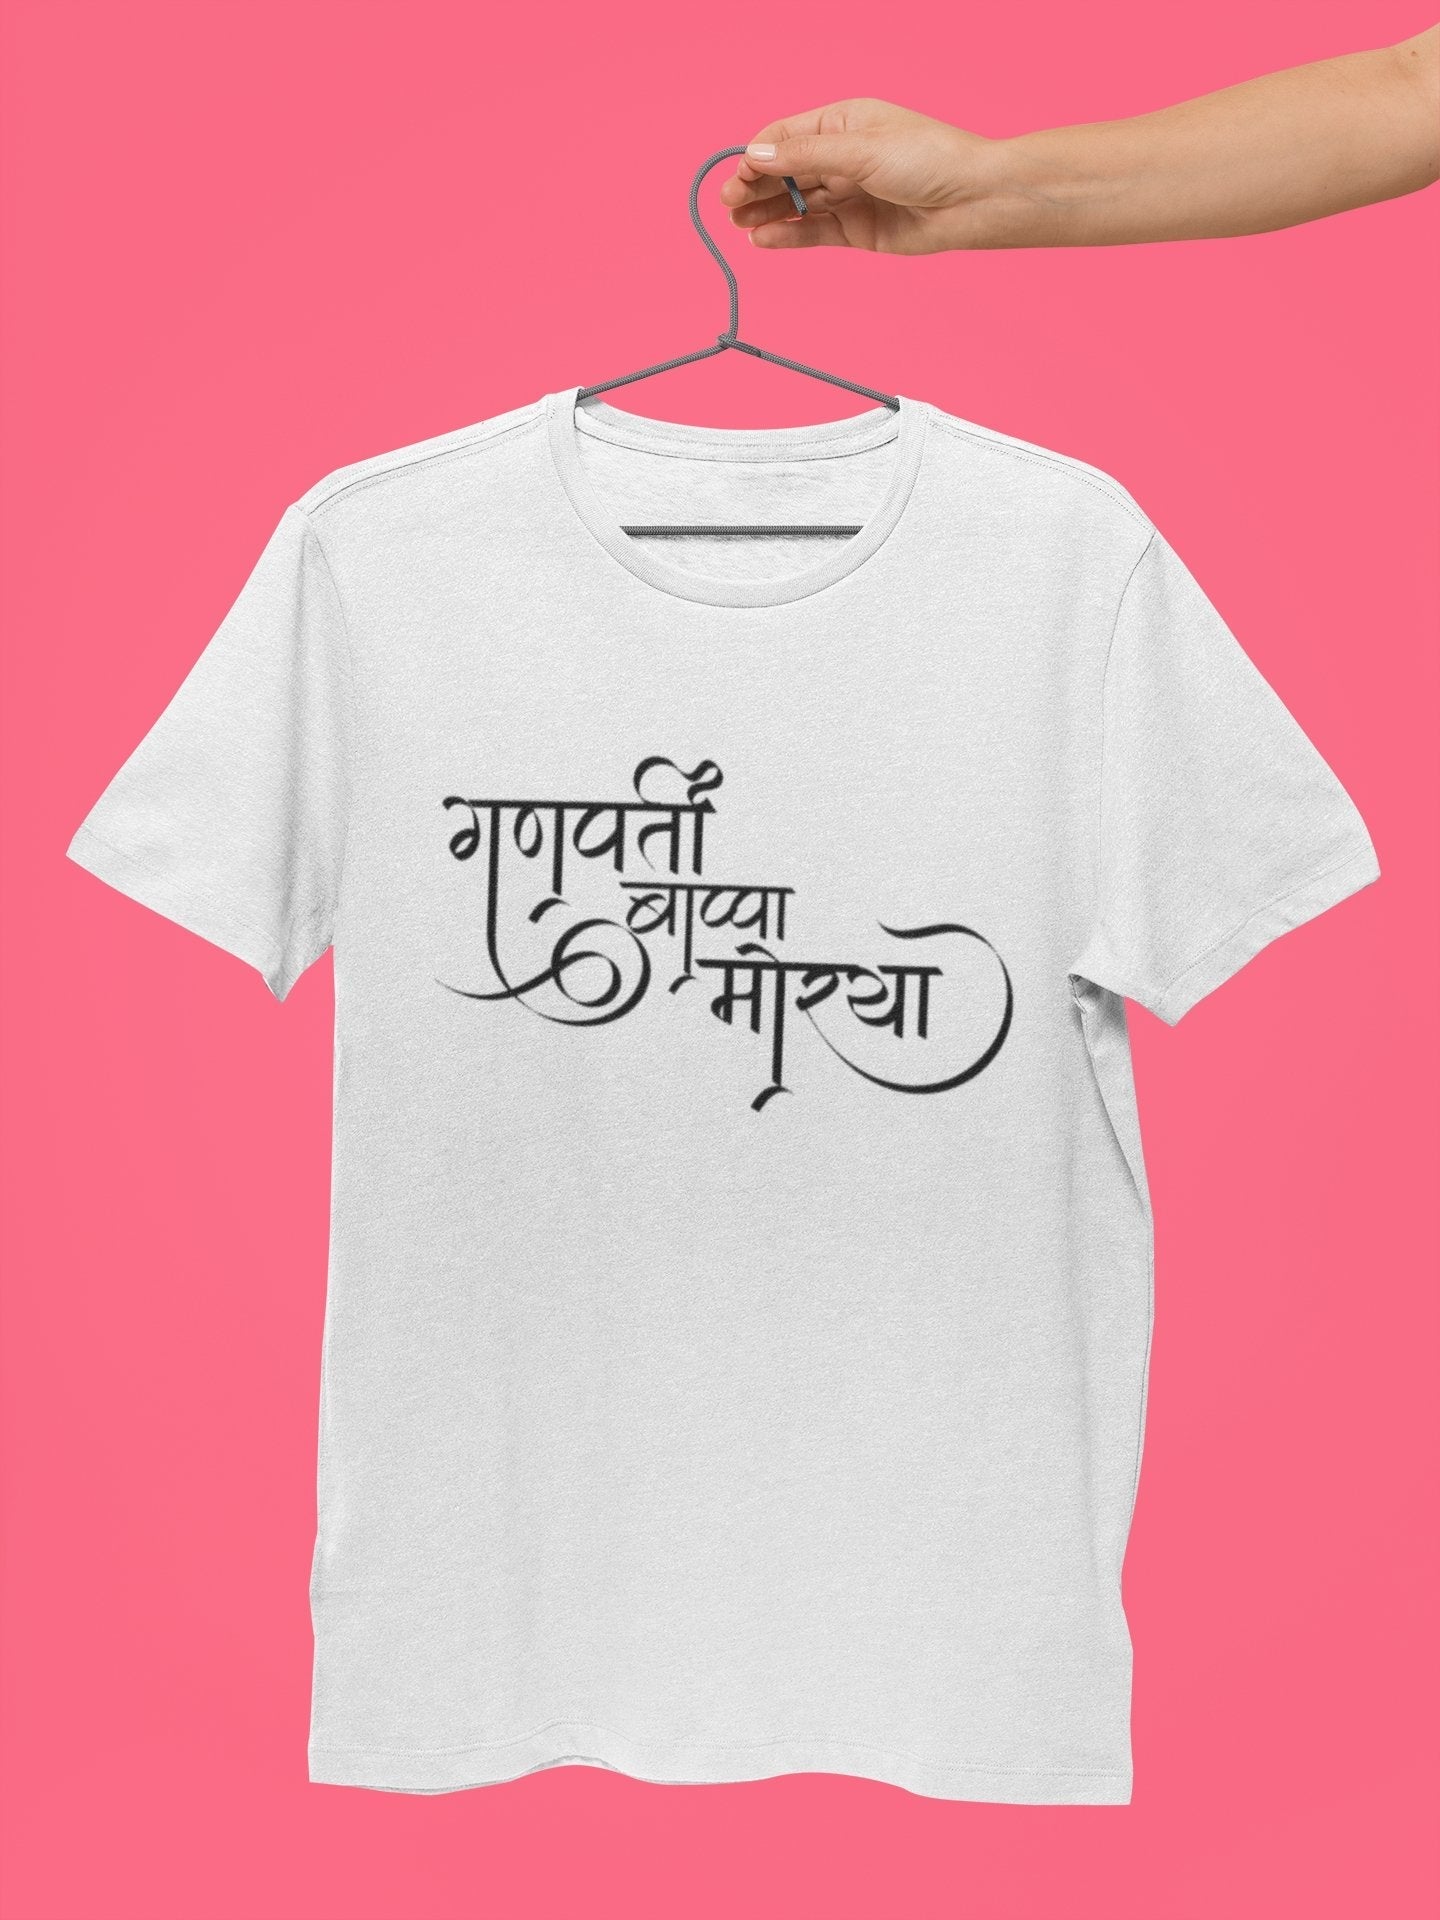 Ganpati Bappa Morya Tshirt - Insane Tees